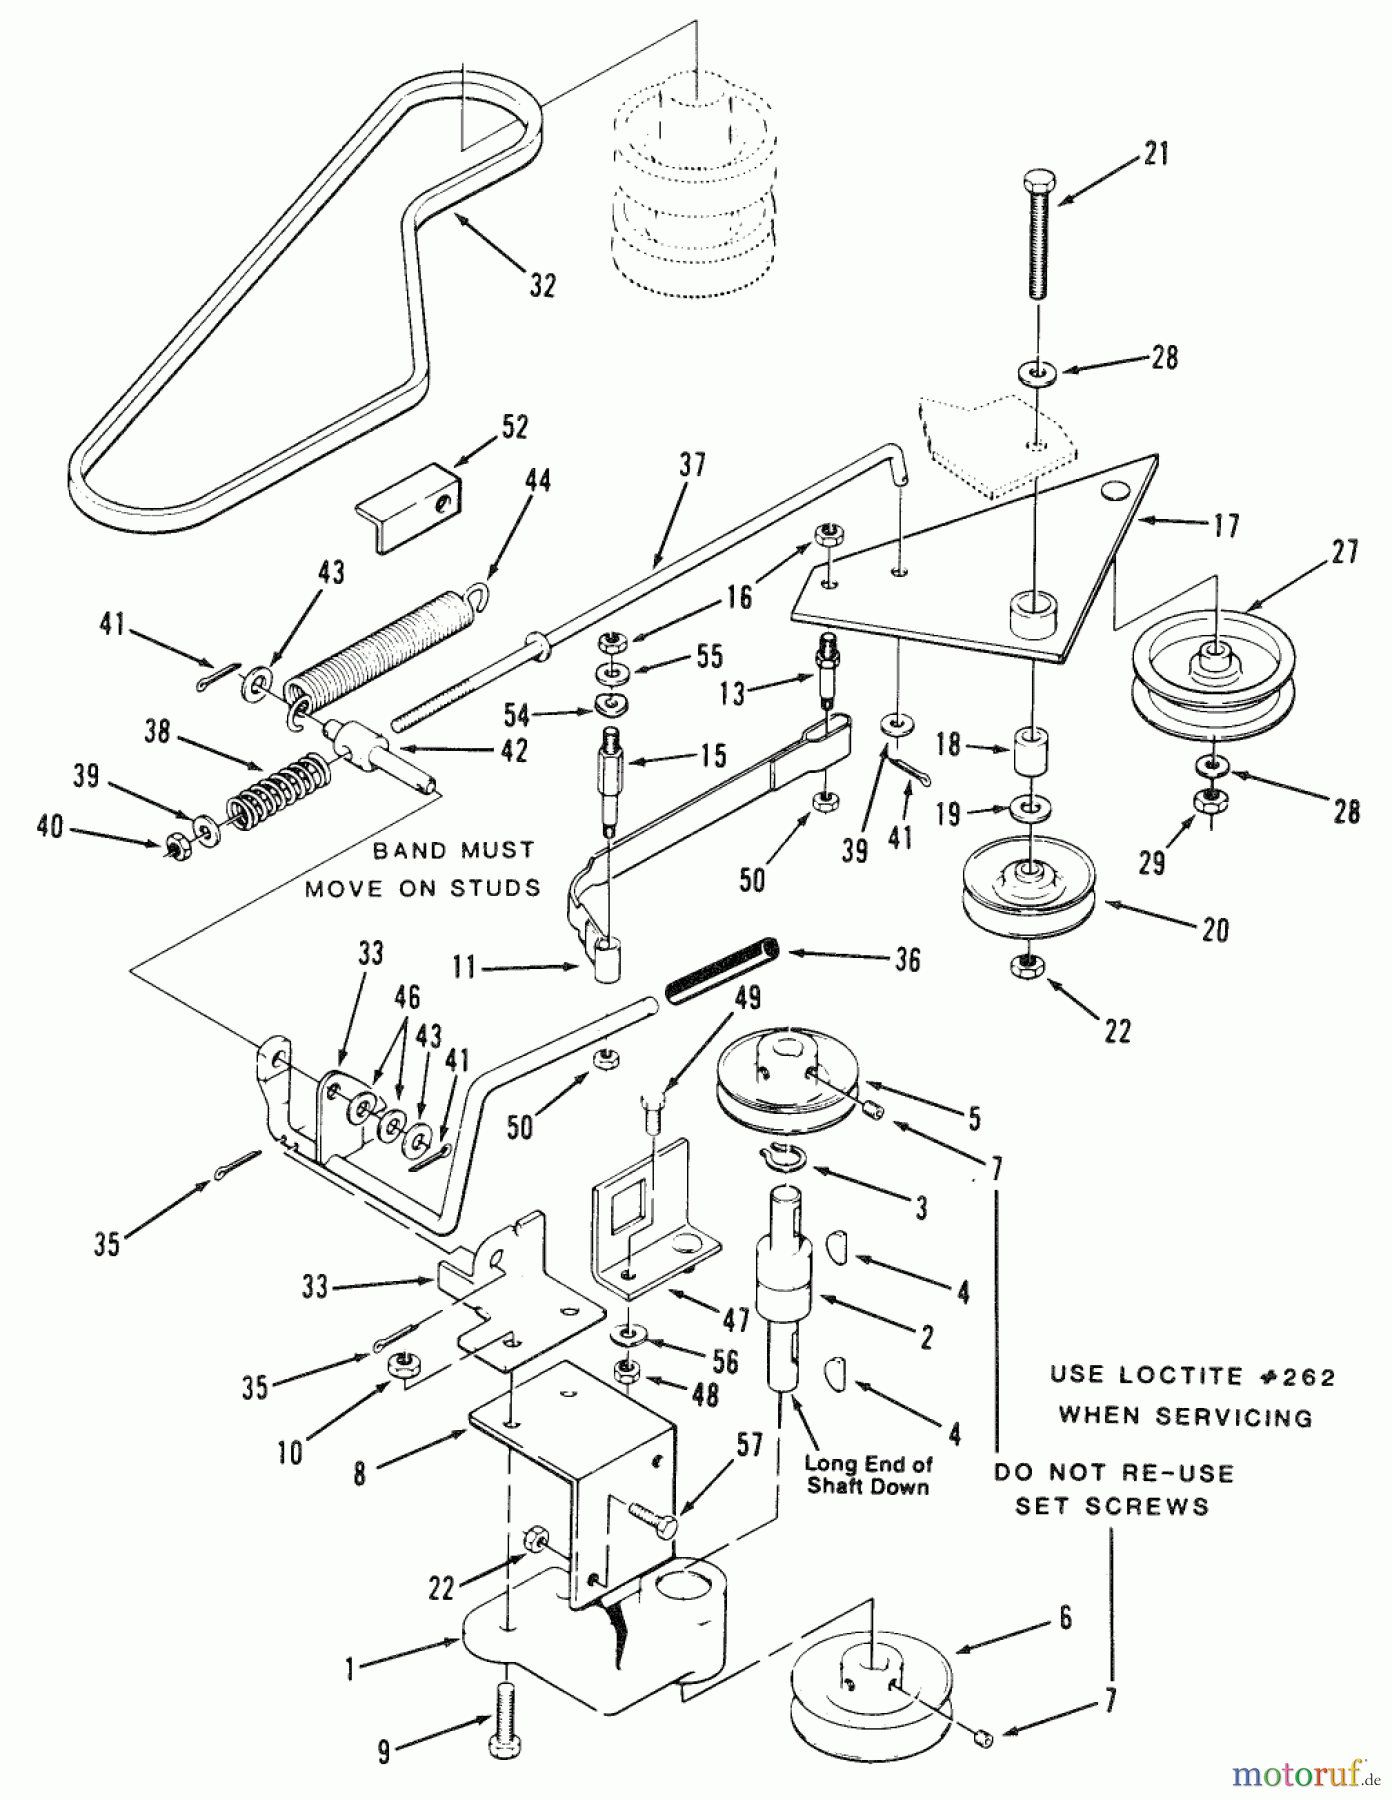  Toro Neu Mowers, Rear-Engine Rider R3-12B601 (112-6e) - Toro 112-6e Rear Engine Rider, 1990 SECTION 10-PTO CLUTCH, PULLEYS, AND CONTROLS